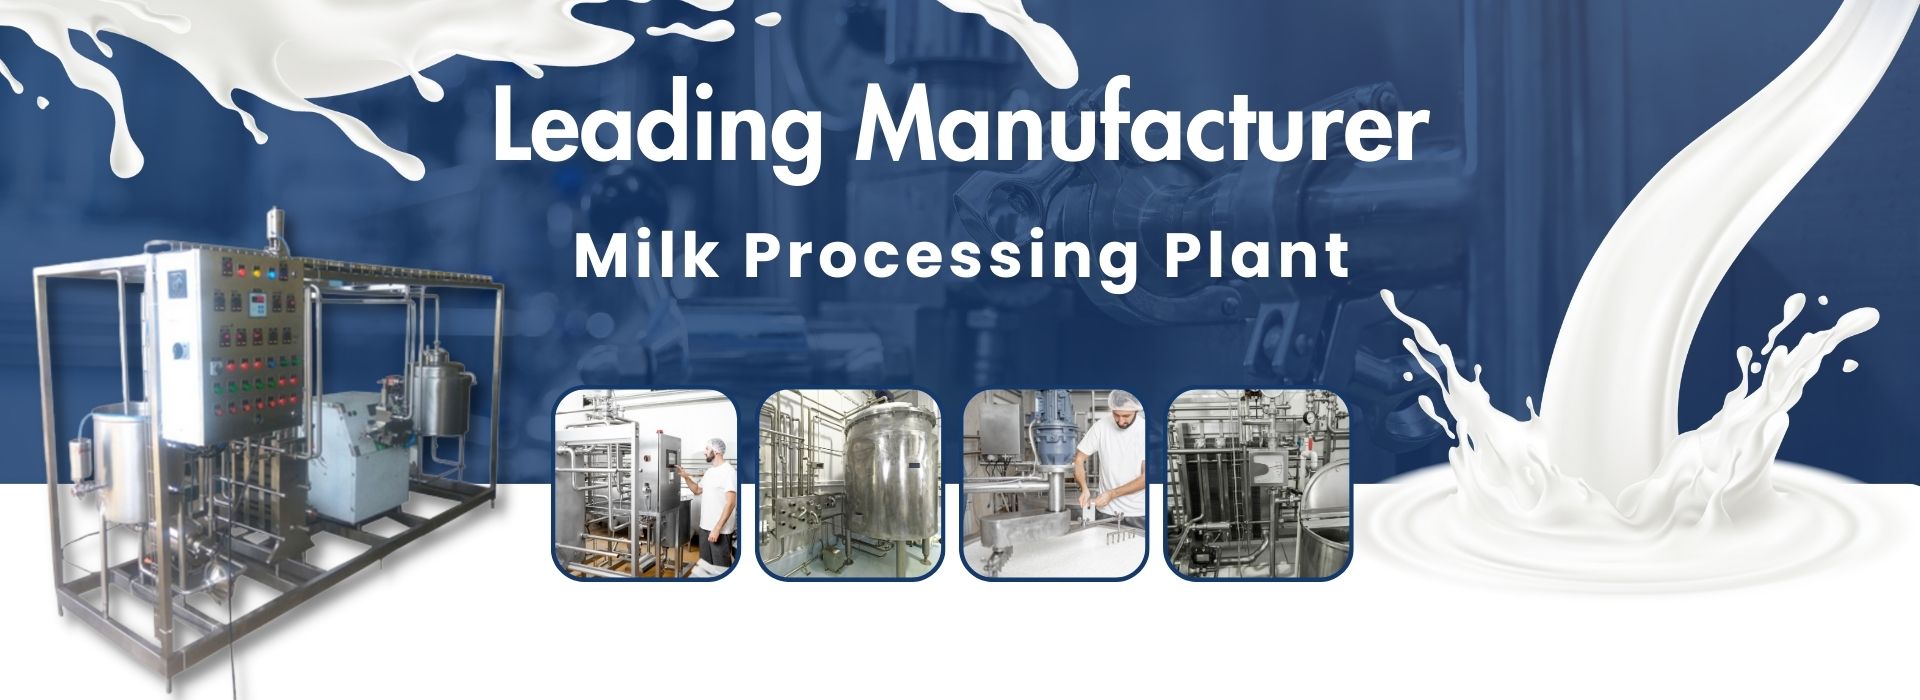 Milk Processing Plant 1